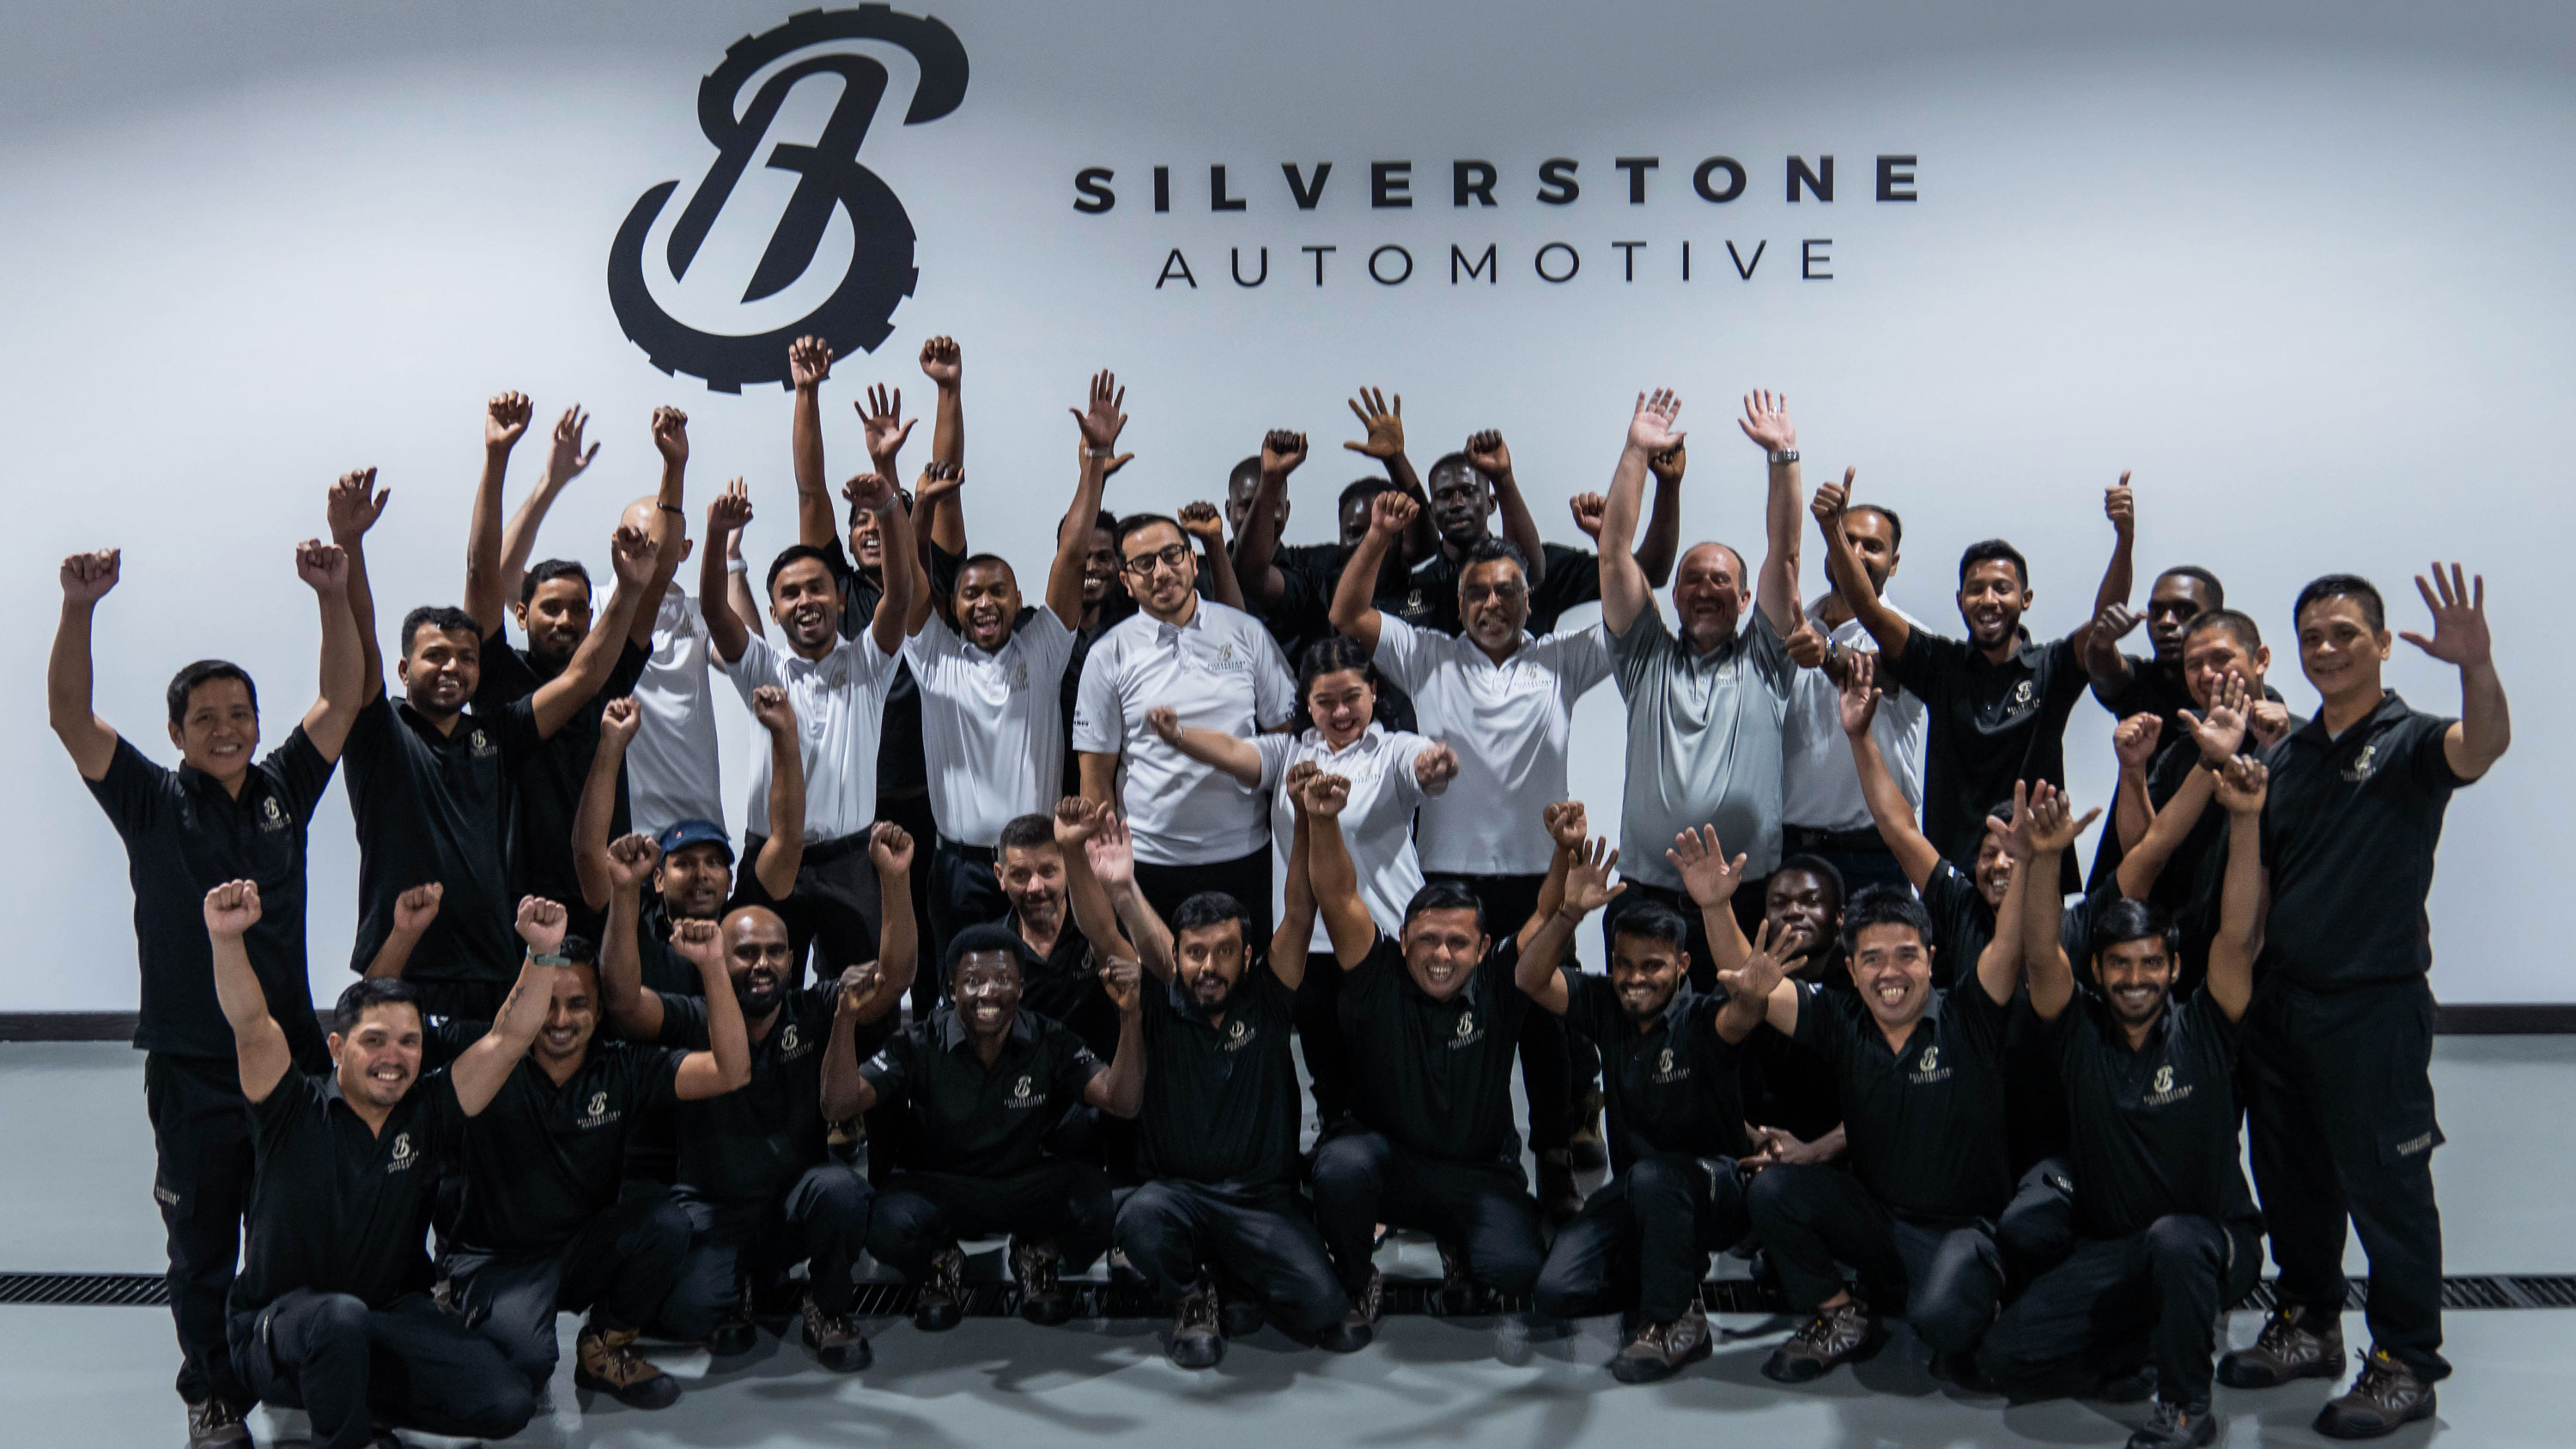 Silverstone Automotive Mission